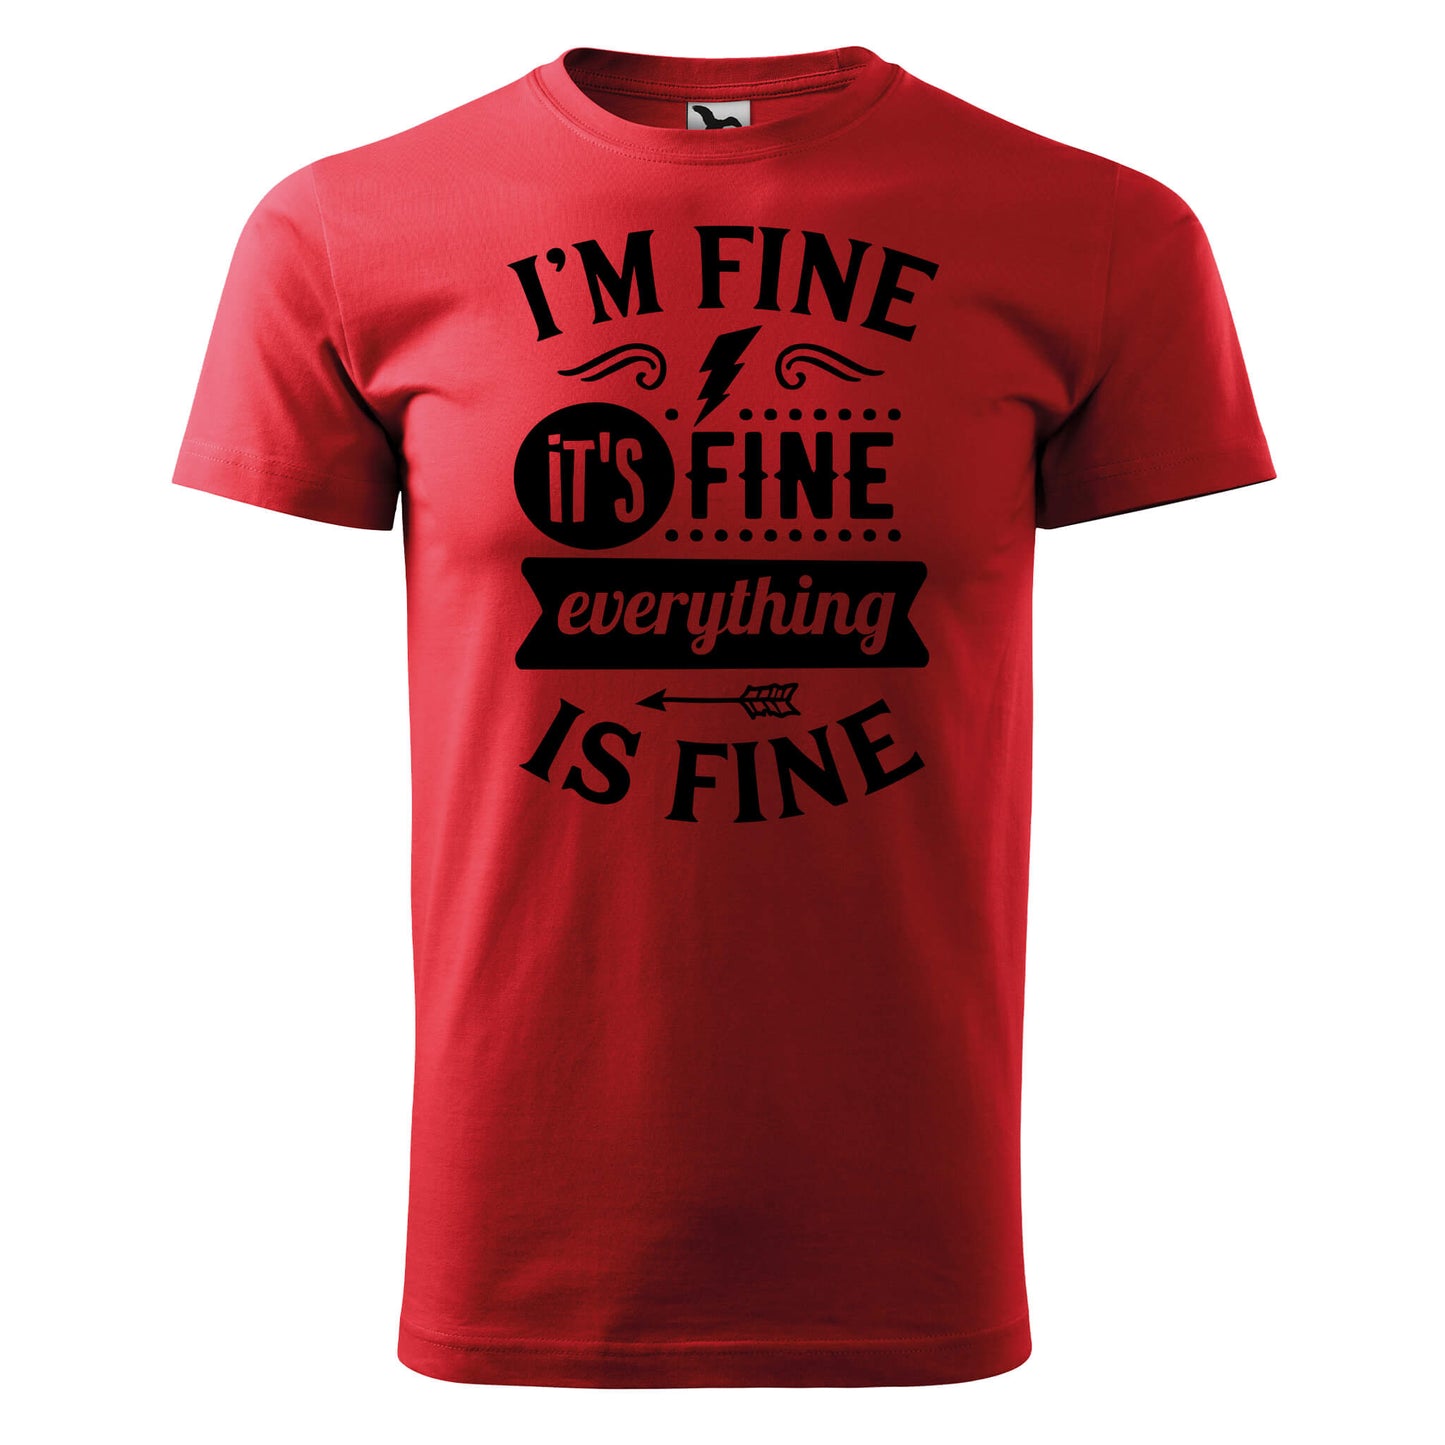 Im fine its fine t-shirt - rvdesignprint